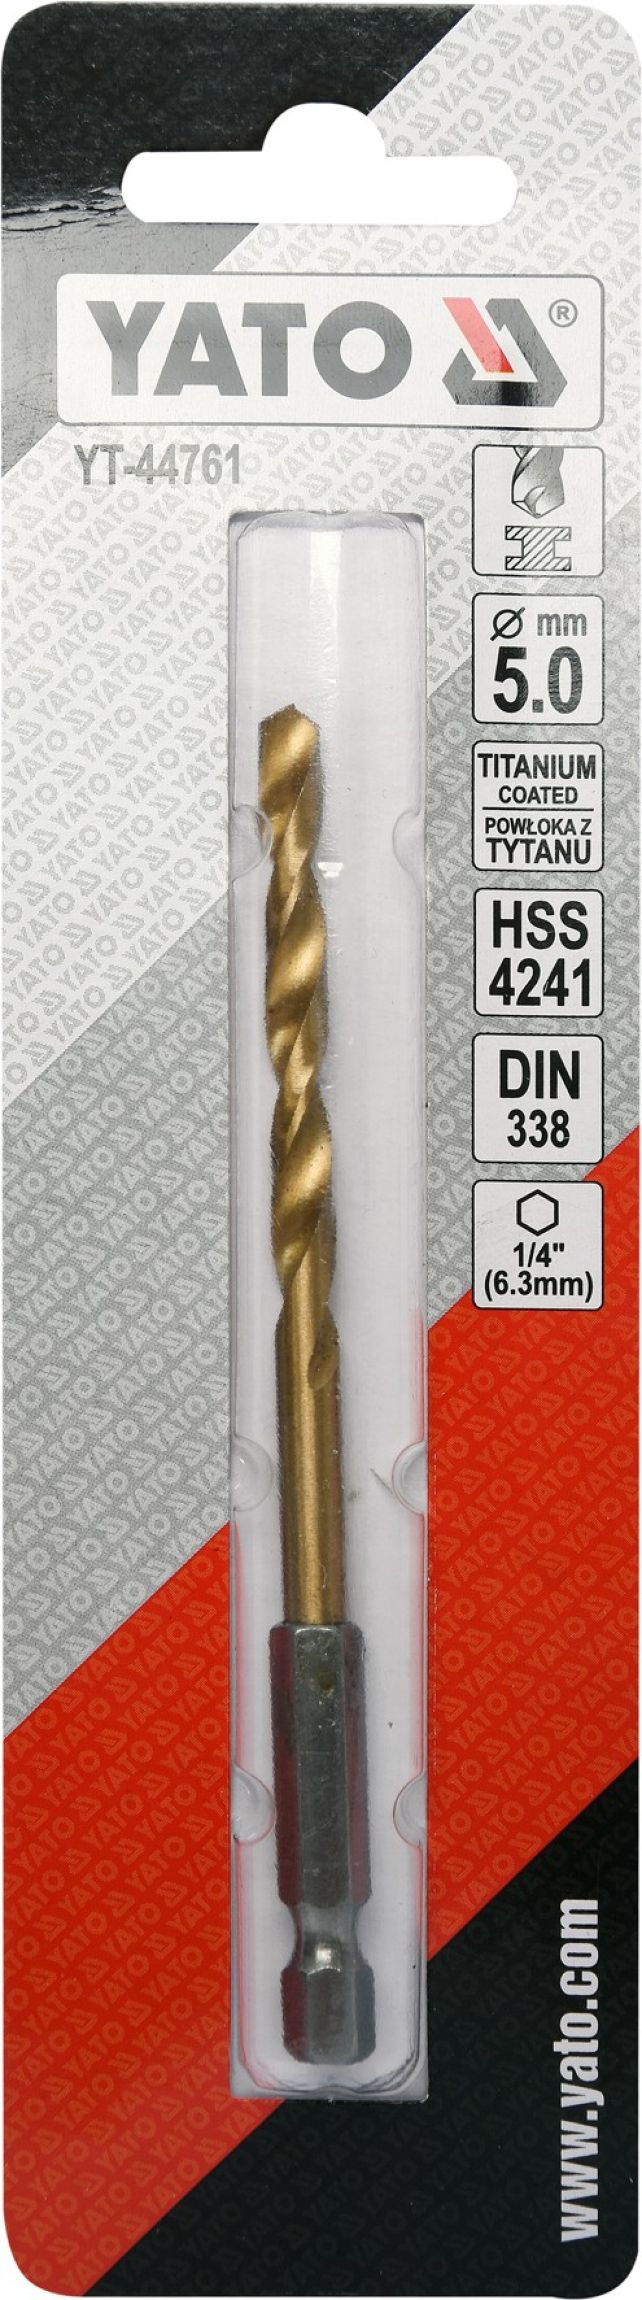 Vrtk do kovu HSS-titan 4,0mm se estihranou stopkou 1/4" Yato YT-44757